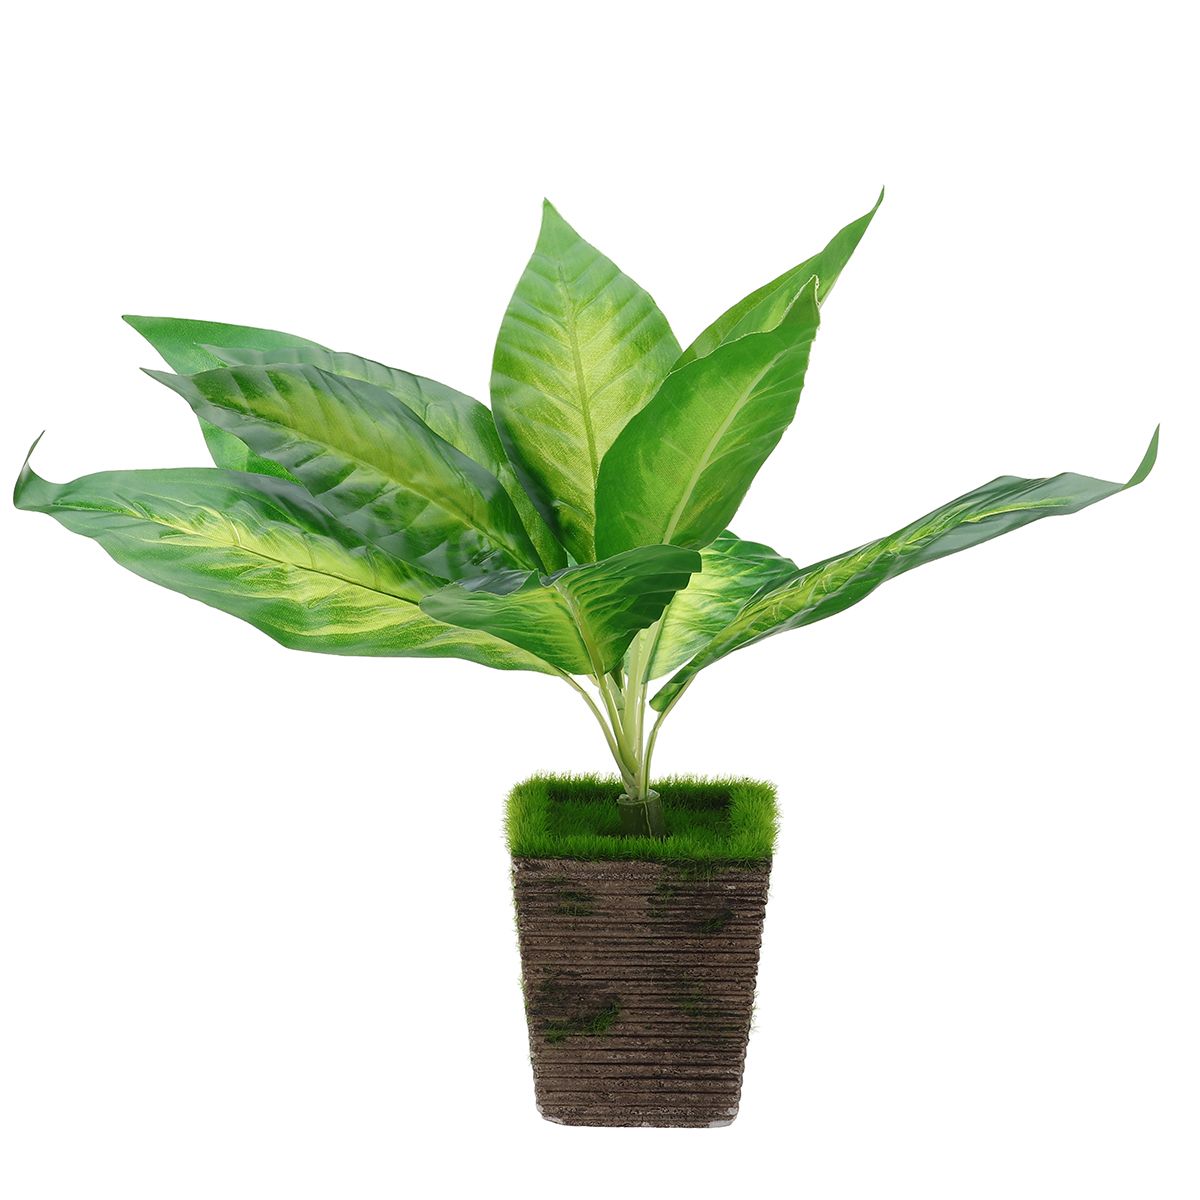 Lifelike-Artificial-Plants-PseudoLeaf-Palm-Leaves-Grass-Pot-Home-Bush-Wall-Decorations-1569842